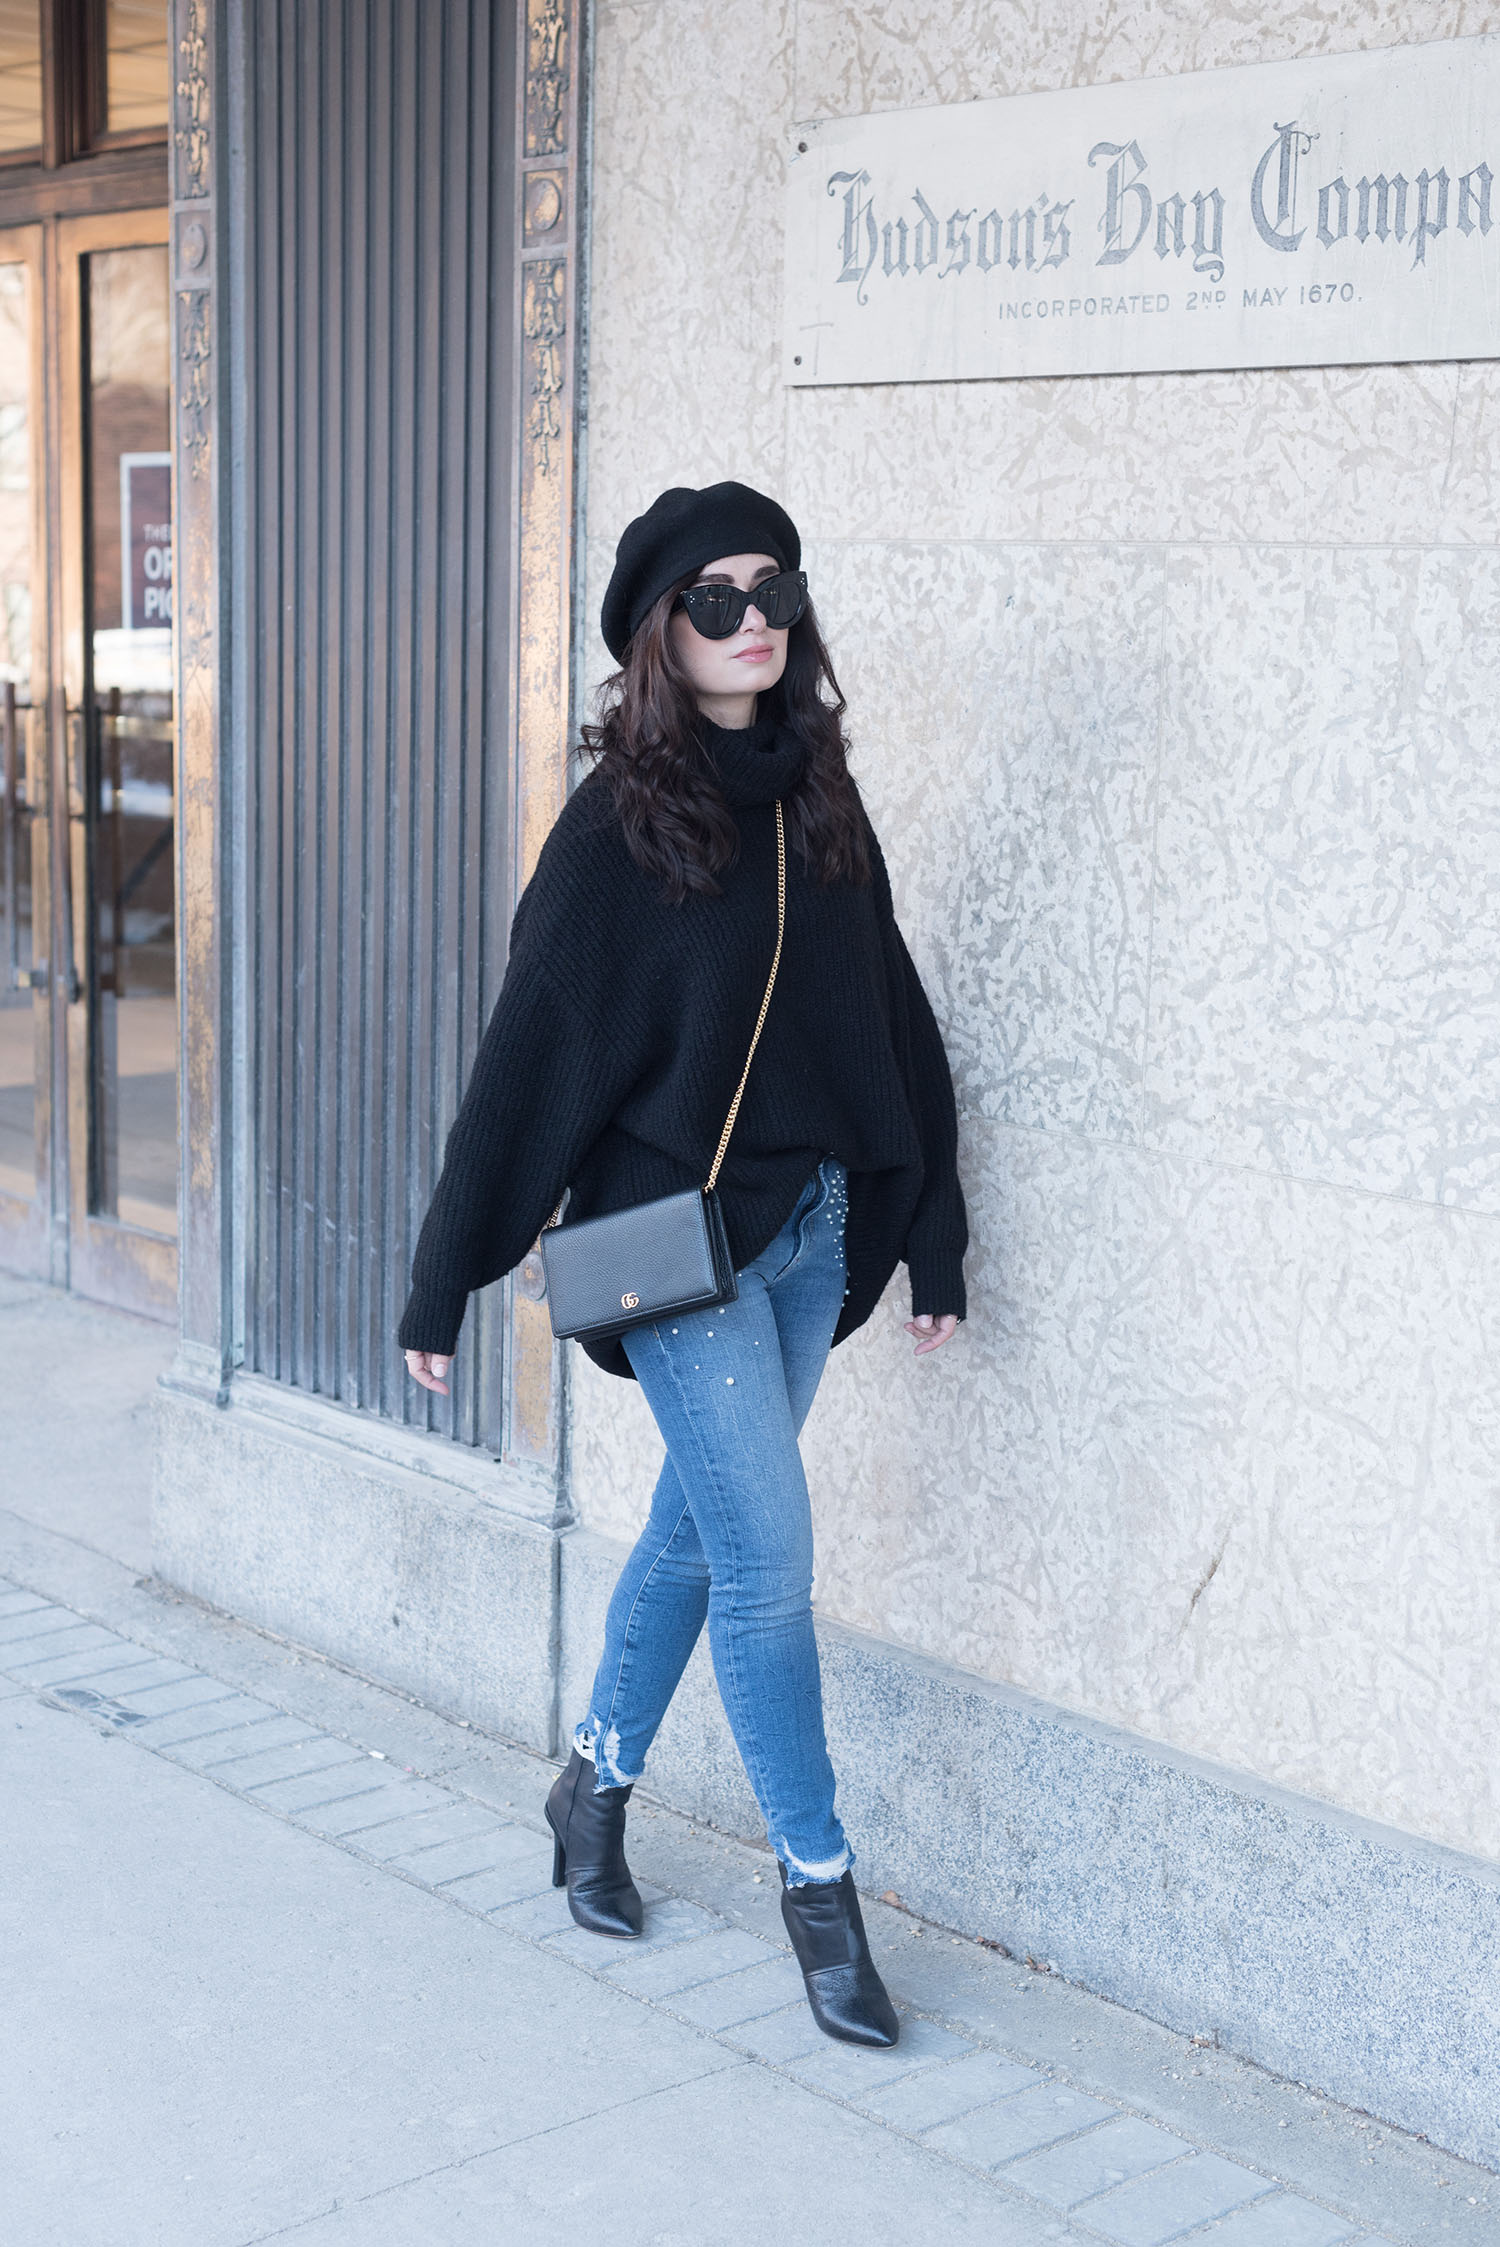 Fashion blogger Cee Fardoe of Coco & Vera walk-in downtown Winnipeg wearing an Anthropologie beret and carrying a Gucci handbag